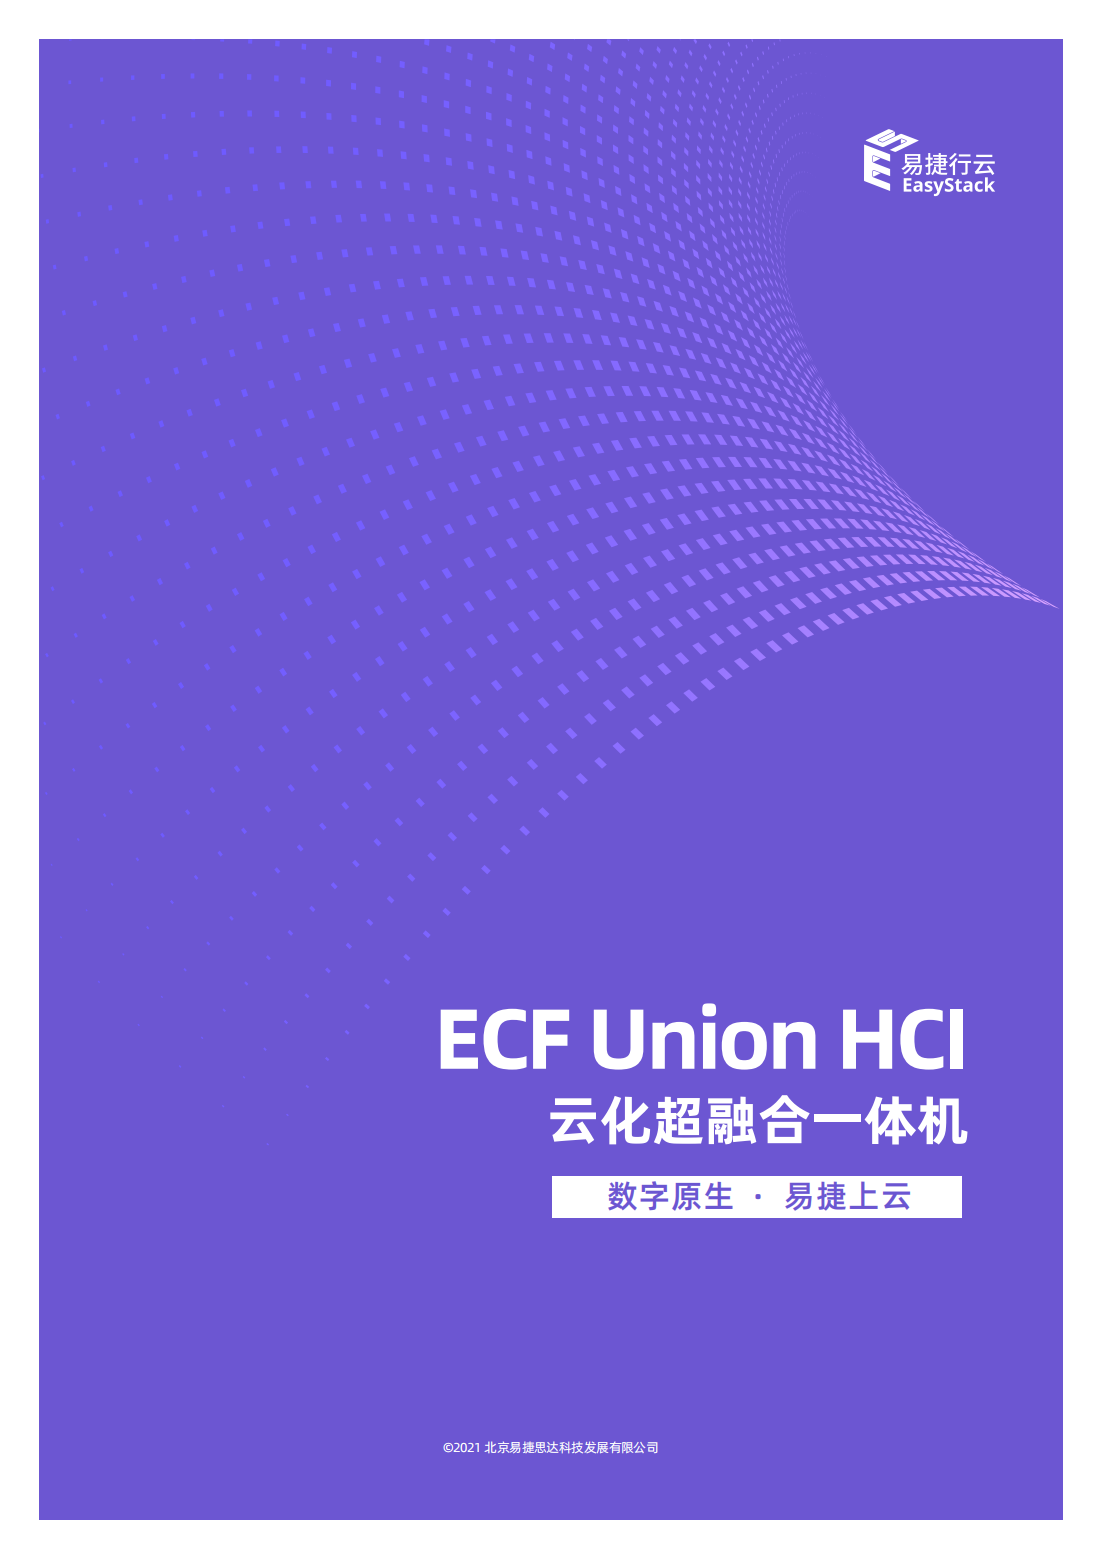 ECF Union HCI云化超融合一体机_00.png